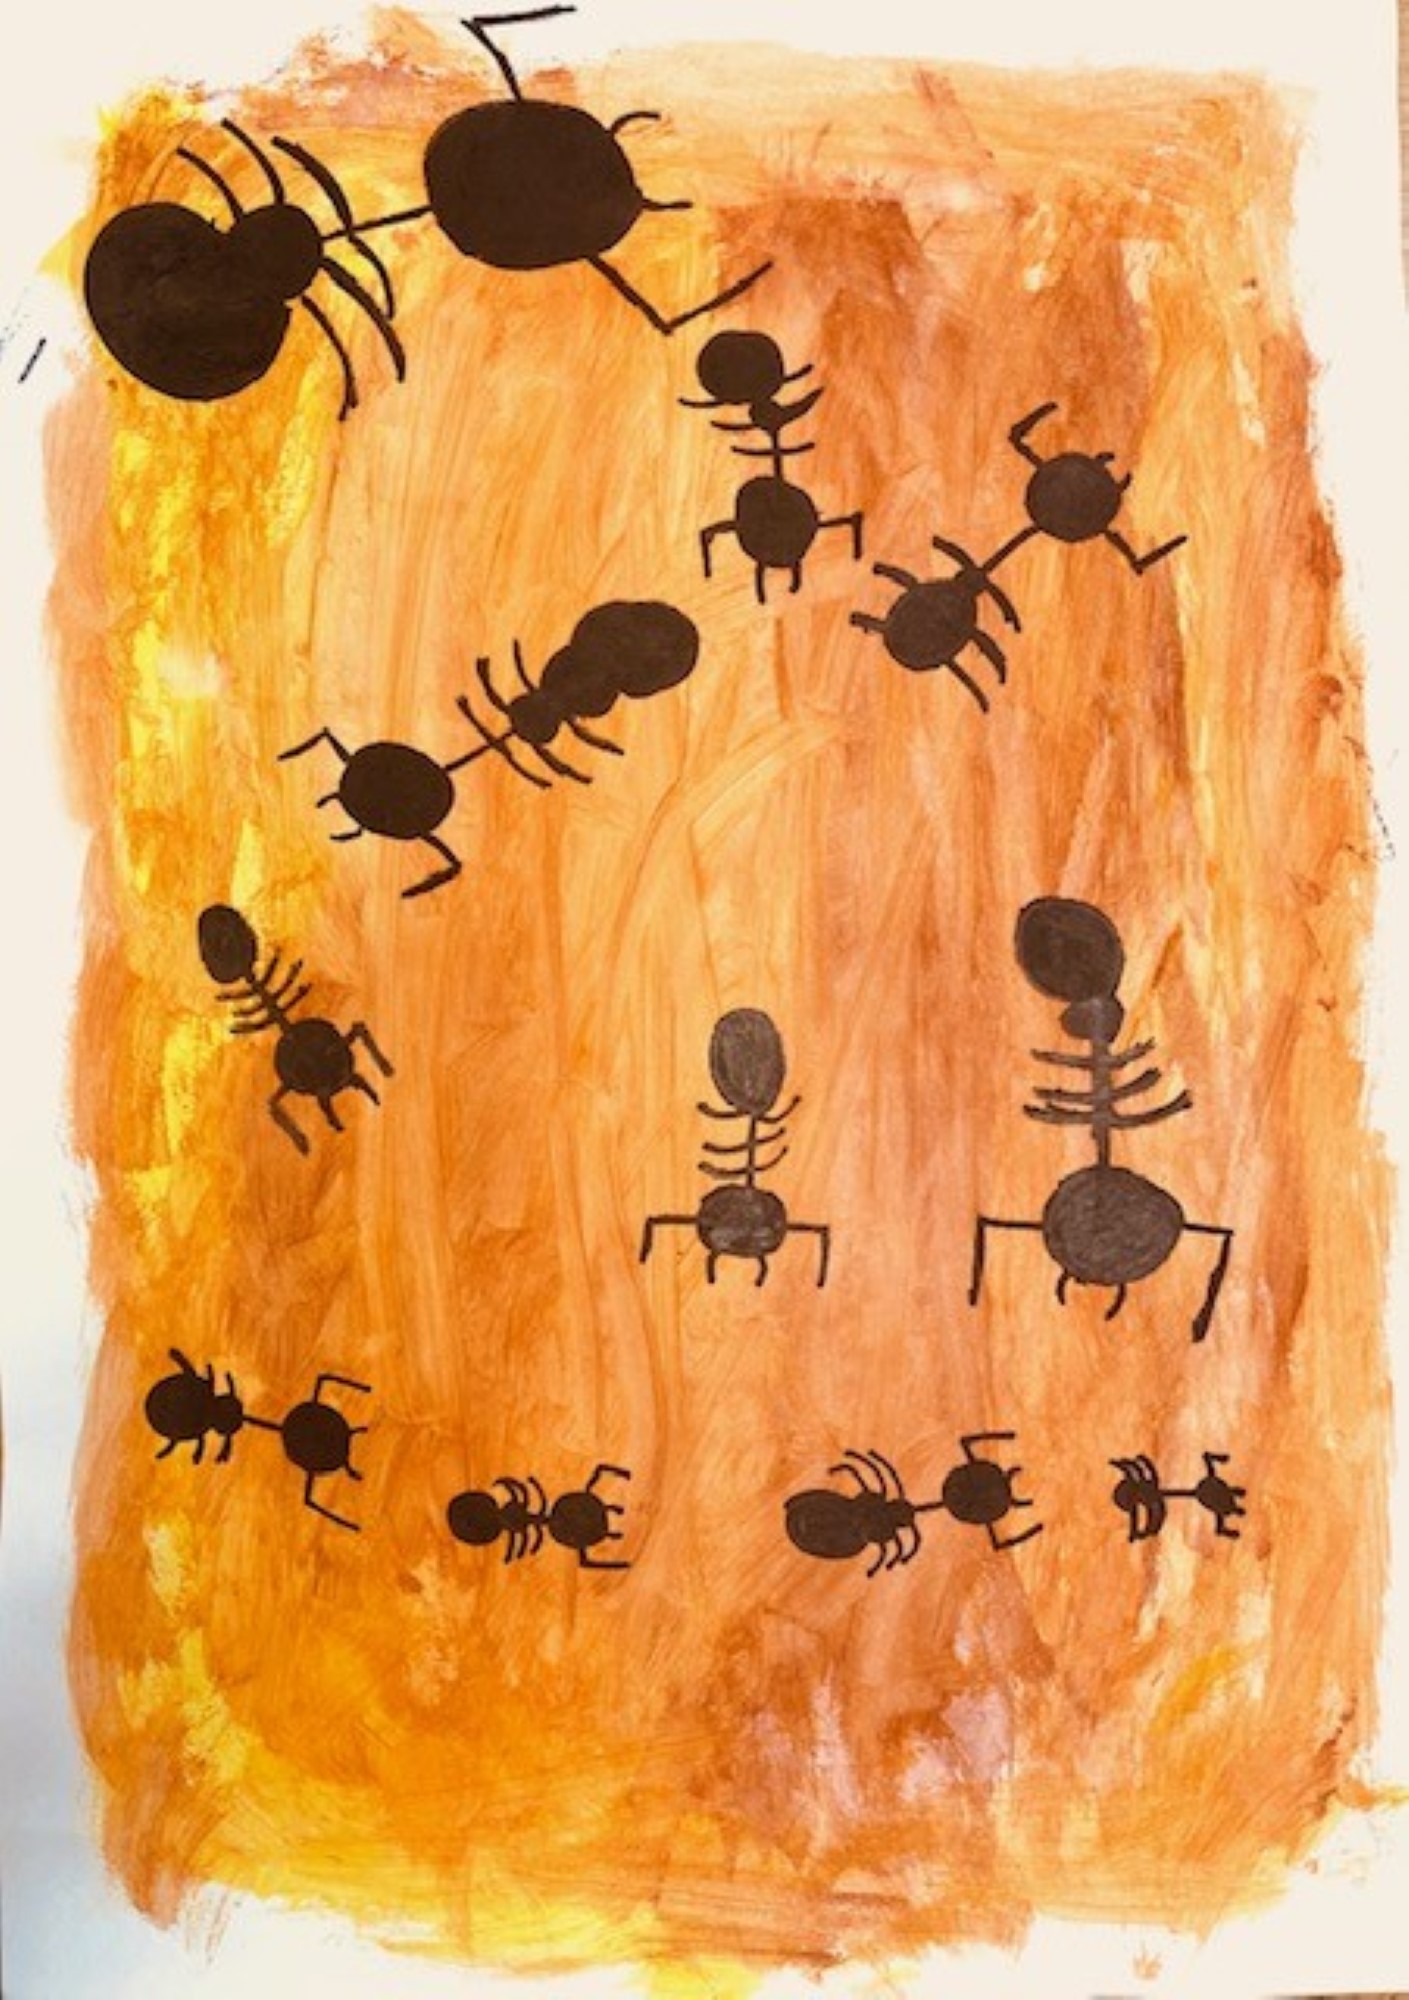 student artwork - Community care (ants) - an artwork inspired by artist Pro Hart